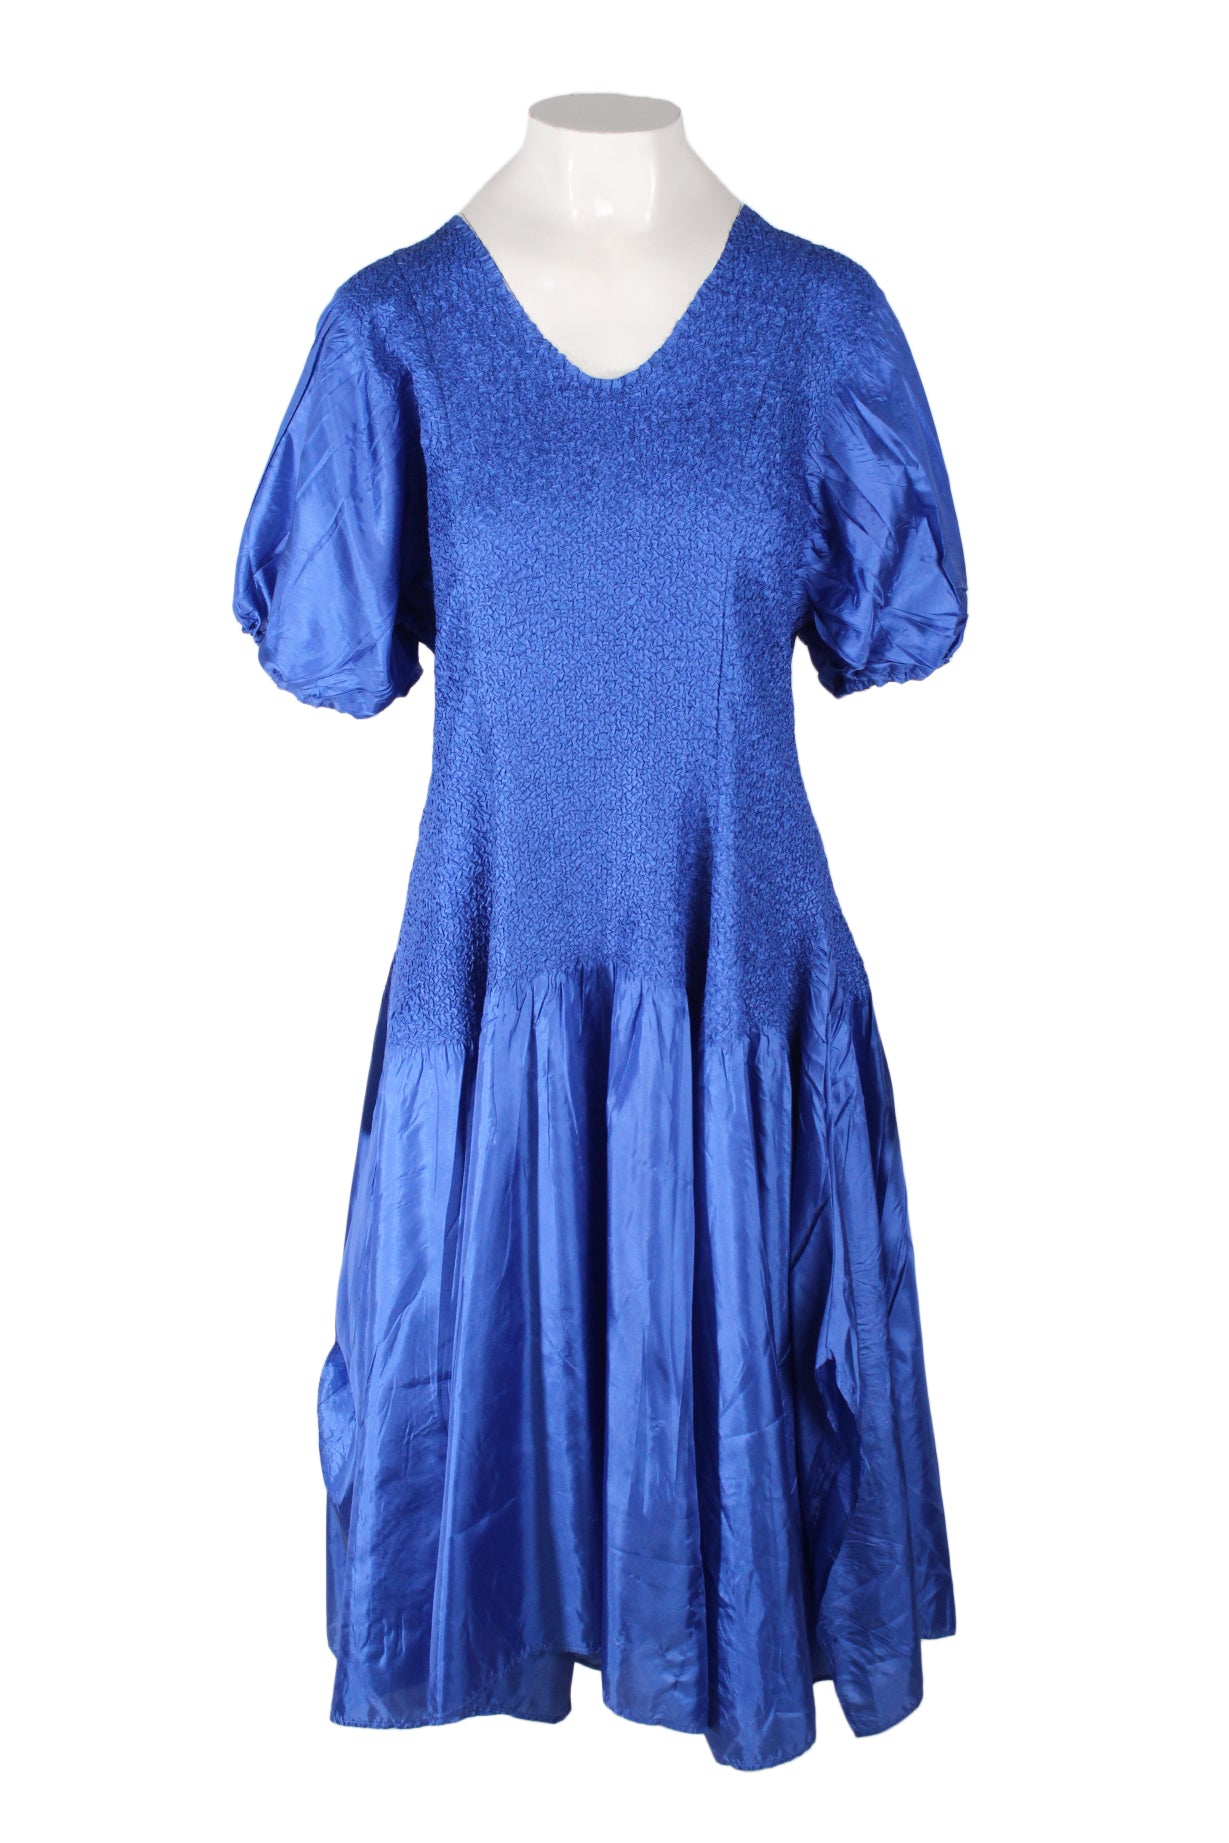 vintage royal blue short sleeve dress. features soft v neck , ruched sleeve trim, crinkled texture from neck to hip, and circular flared dress. slight shoulder slit detail (view 2nd image) 